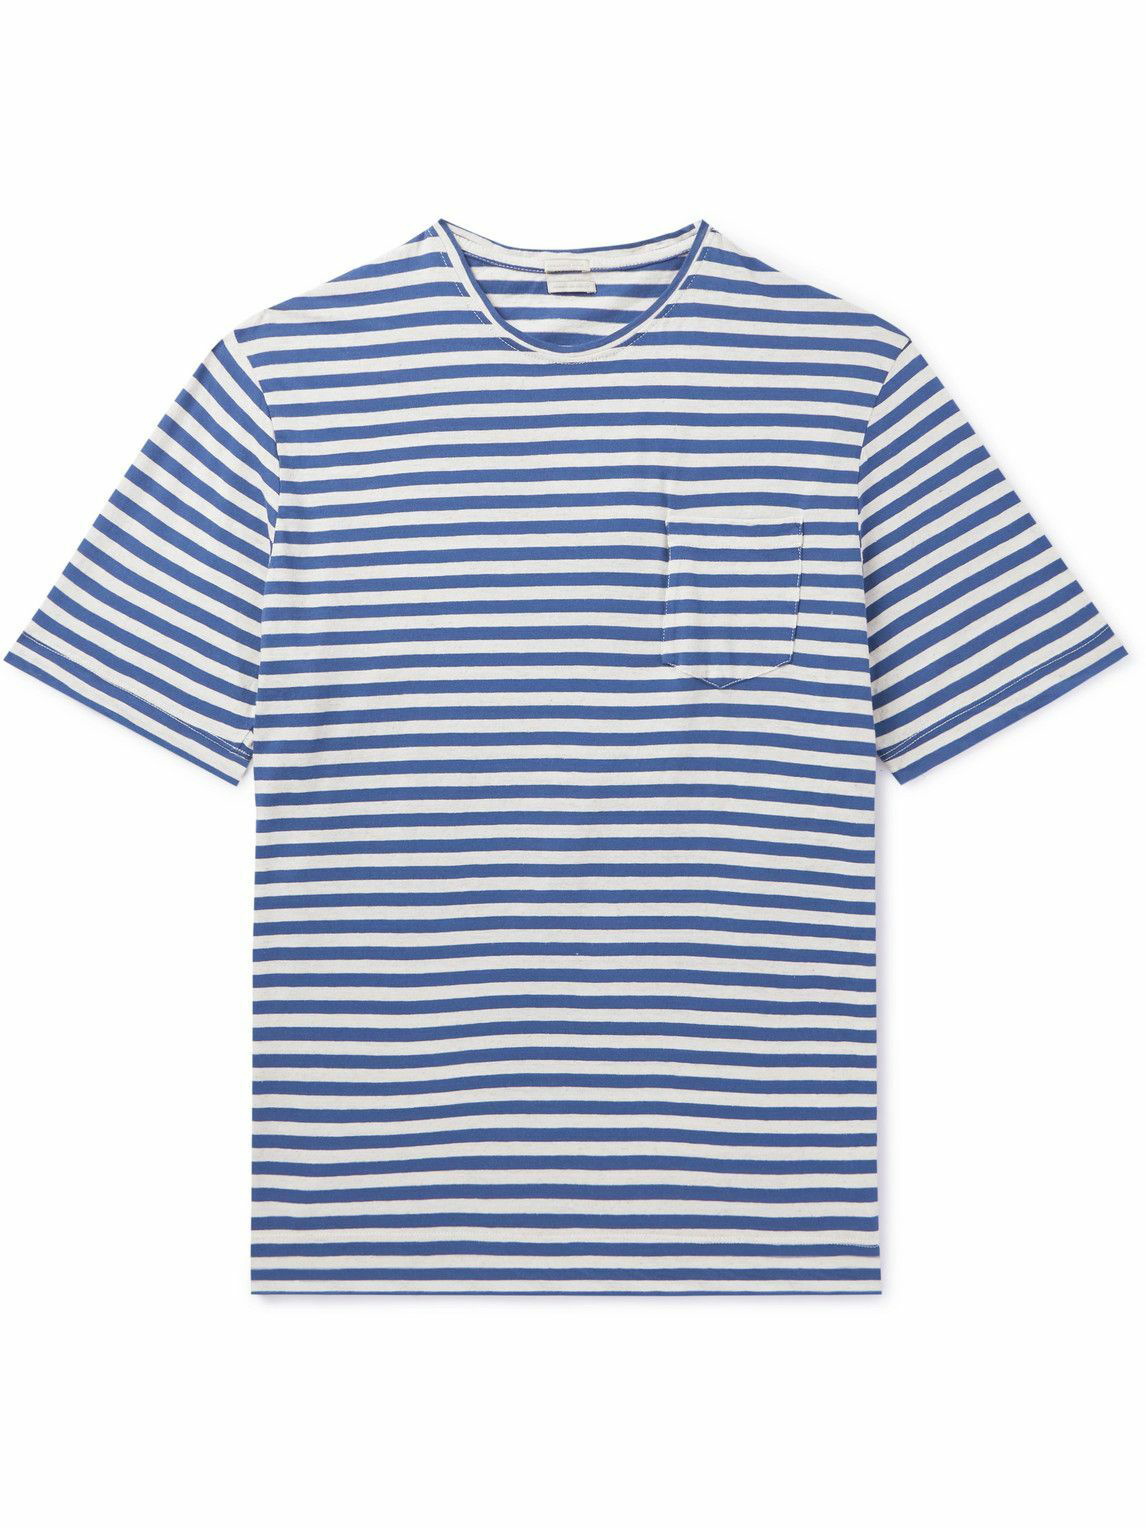 Photo: Massimo Alba - Panarea Striped Cotton and Linen-Blend T-Shirt - White